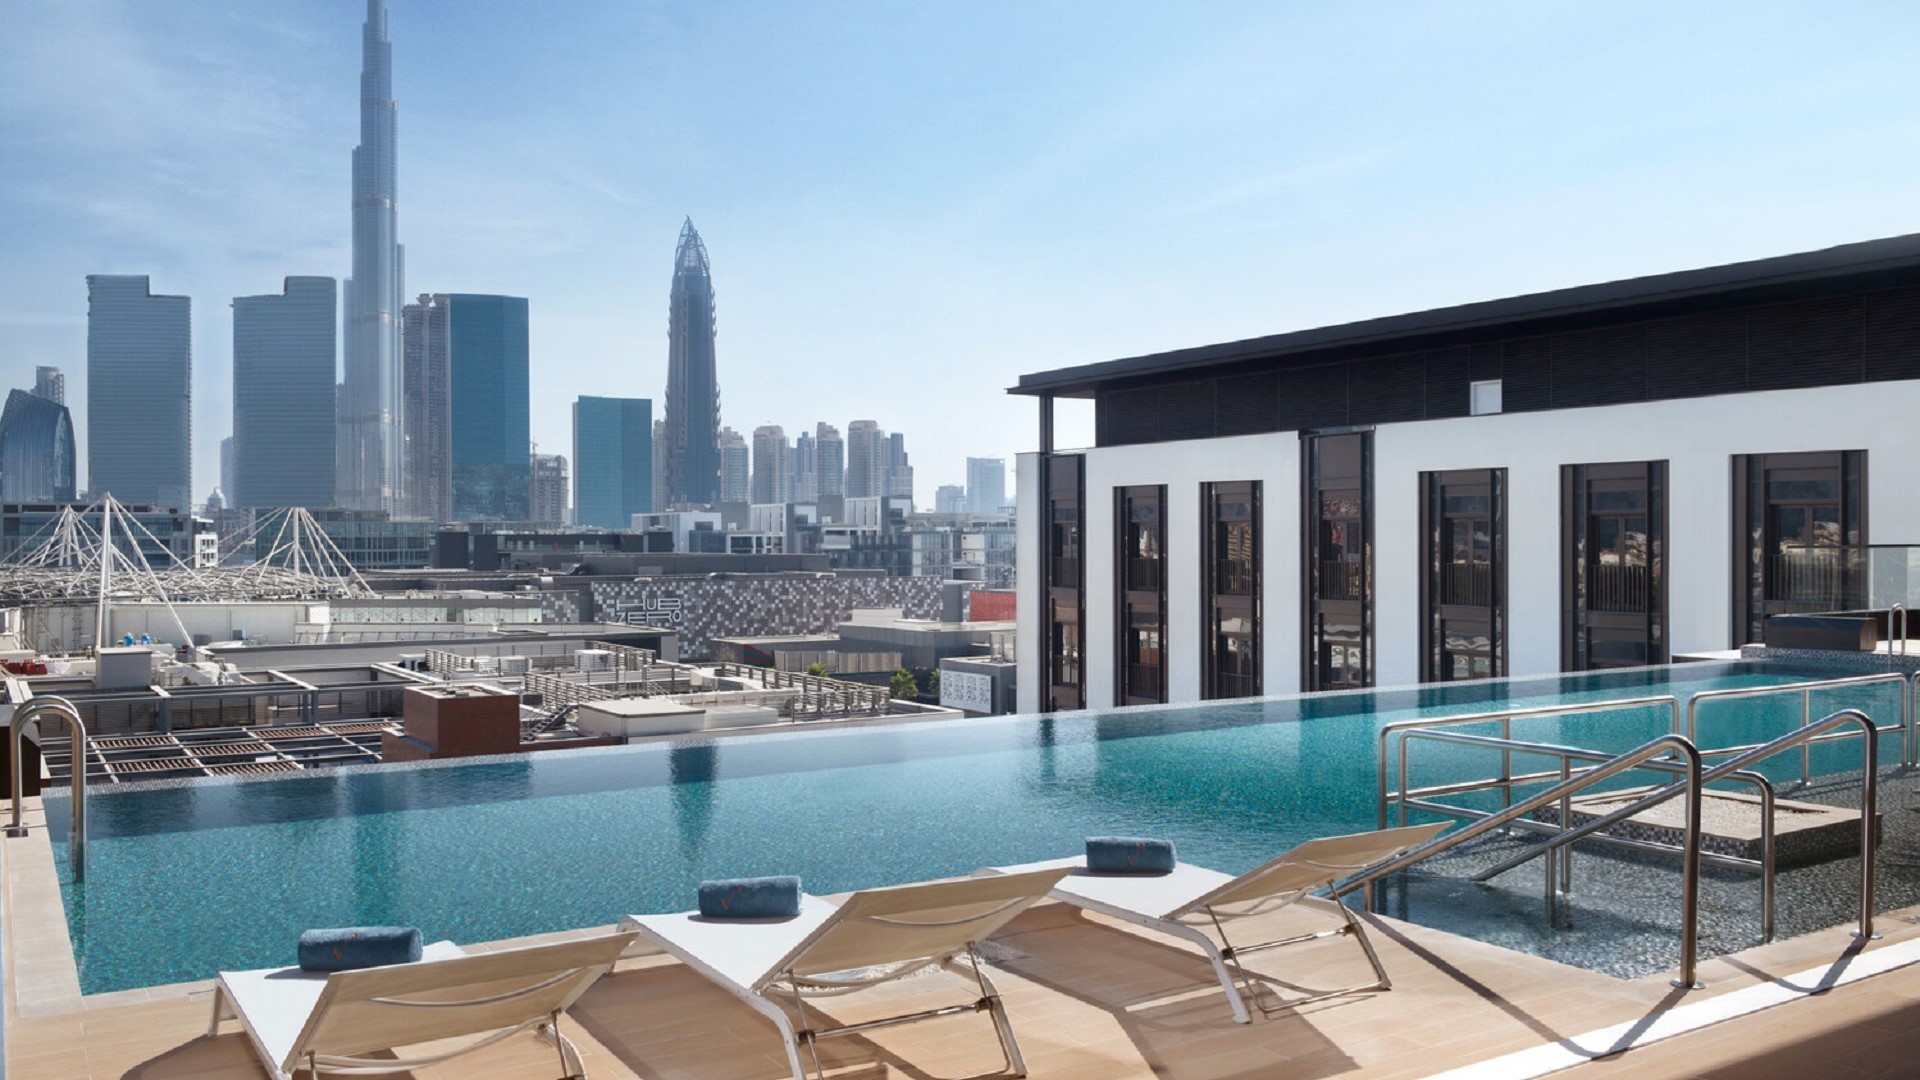 Rooftop infinity pool at LookUp; Dubai rooftop bars